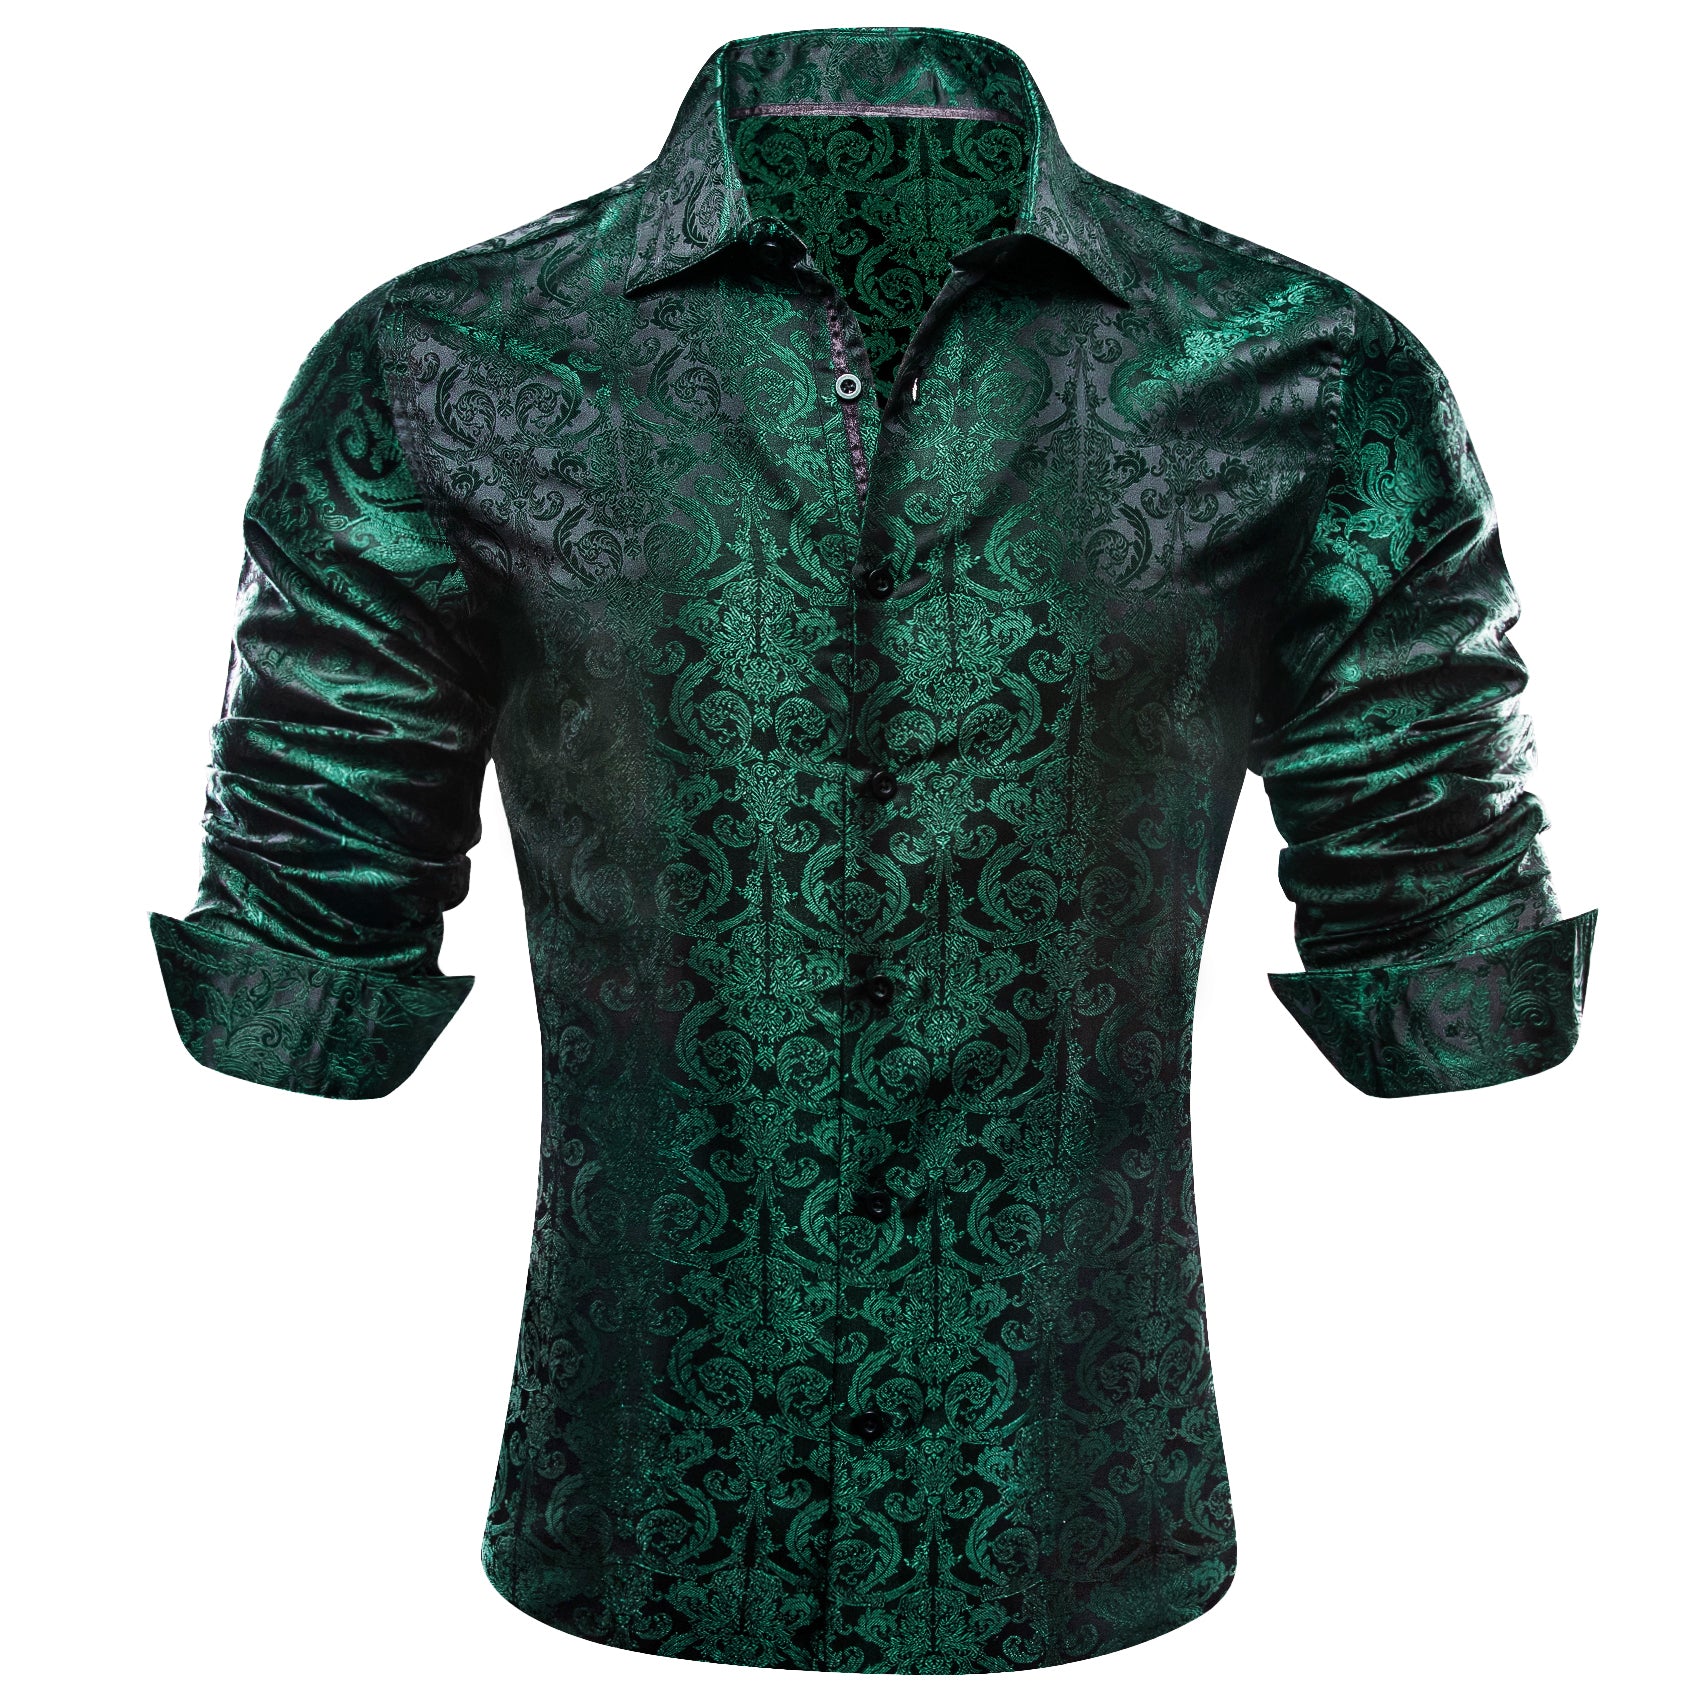 Barry.wang Luxury Black Green Paisley Silk Shirt